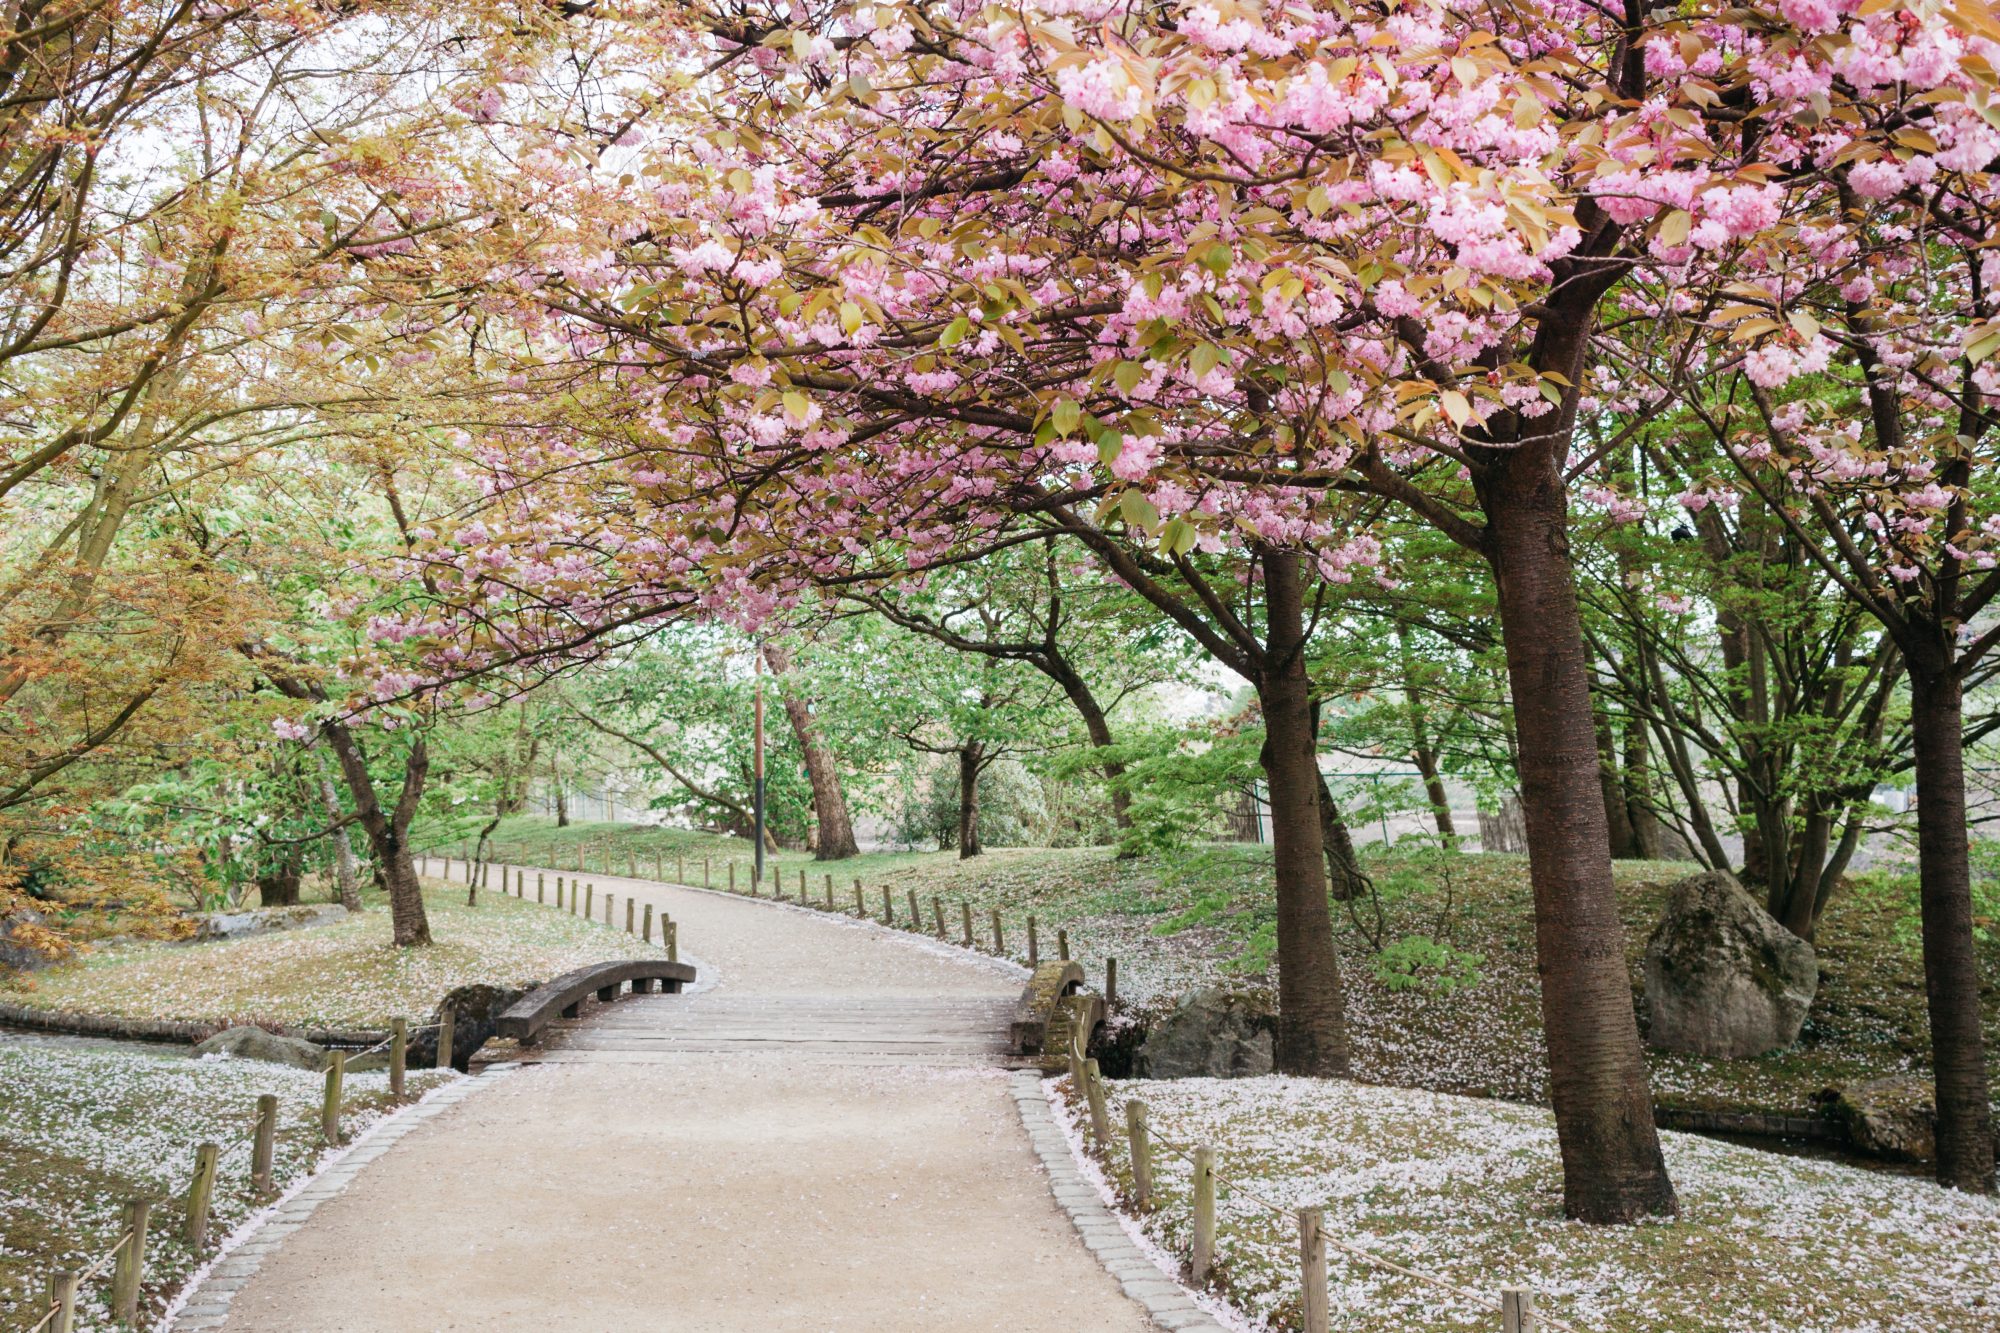 Japanese Garden of Hasselt